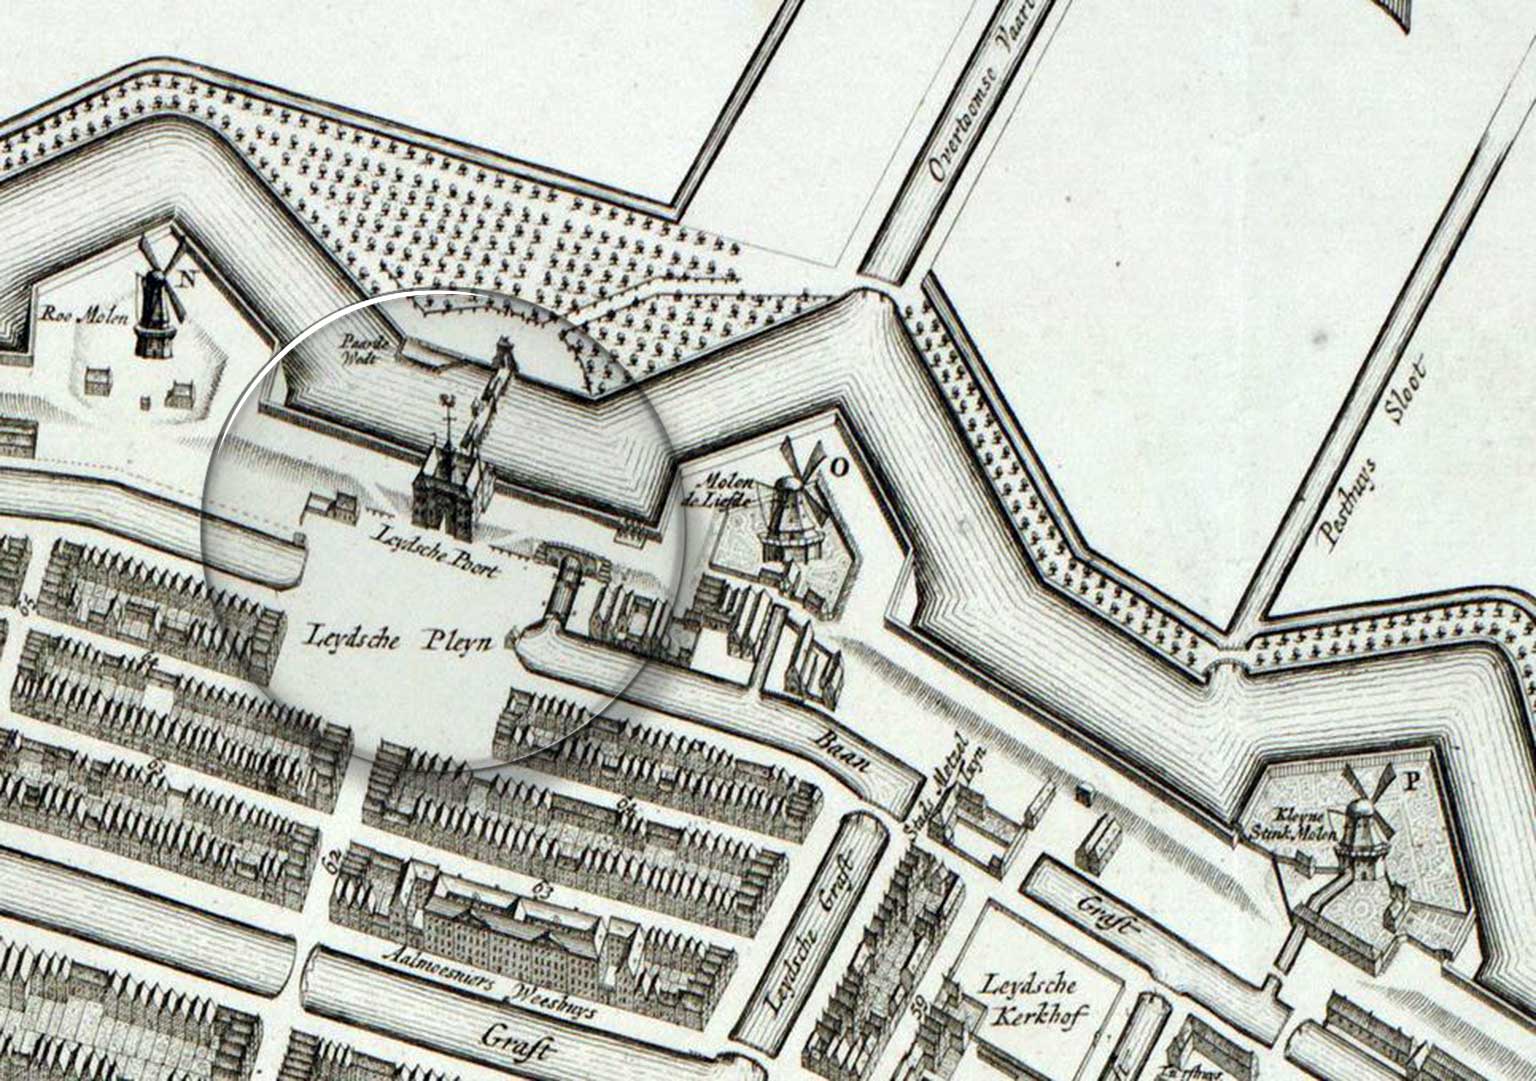 Leidseplein on a map from 1737 by Gerrit de Broen